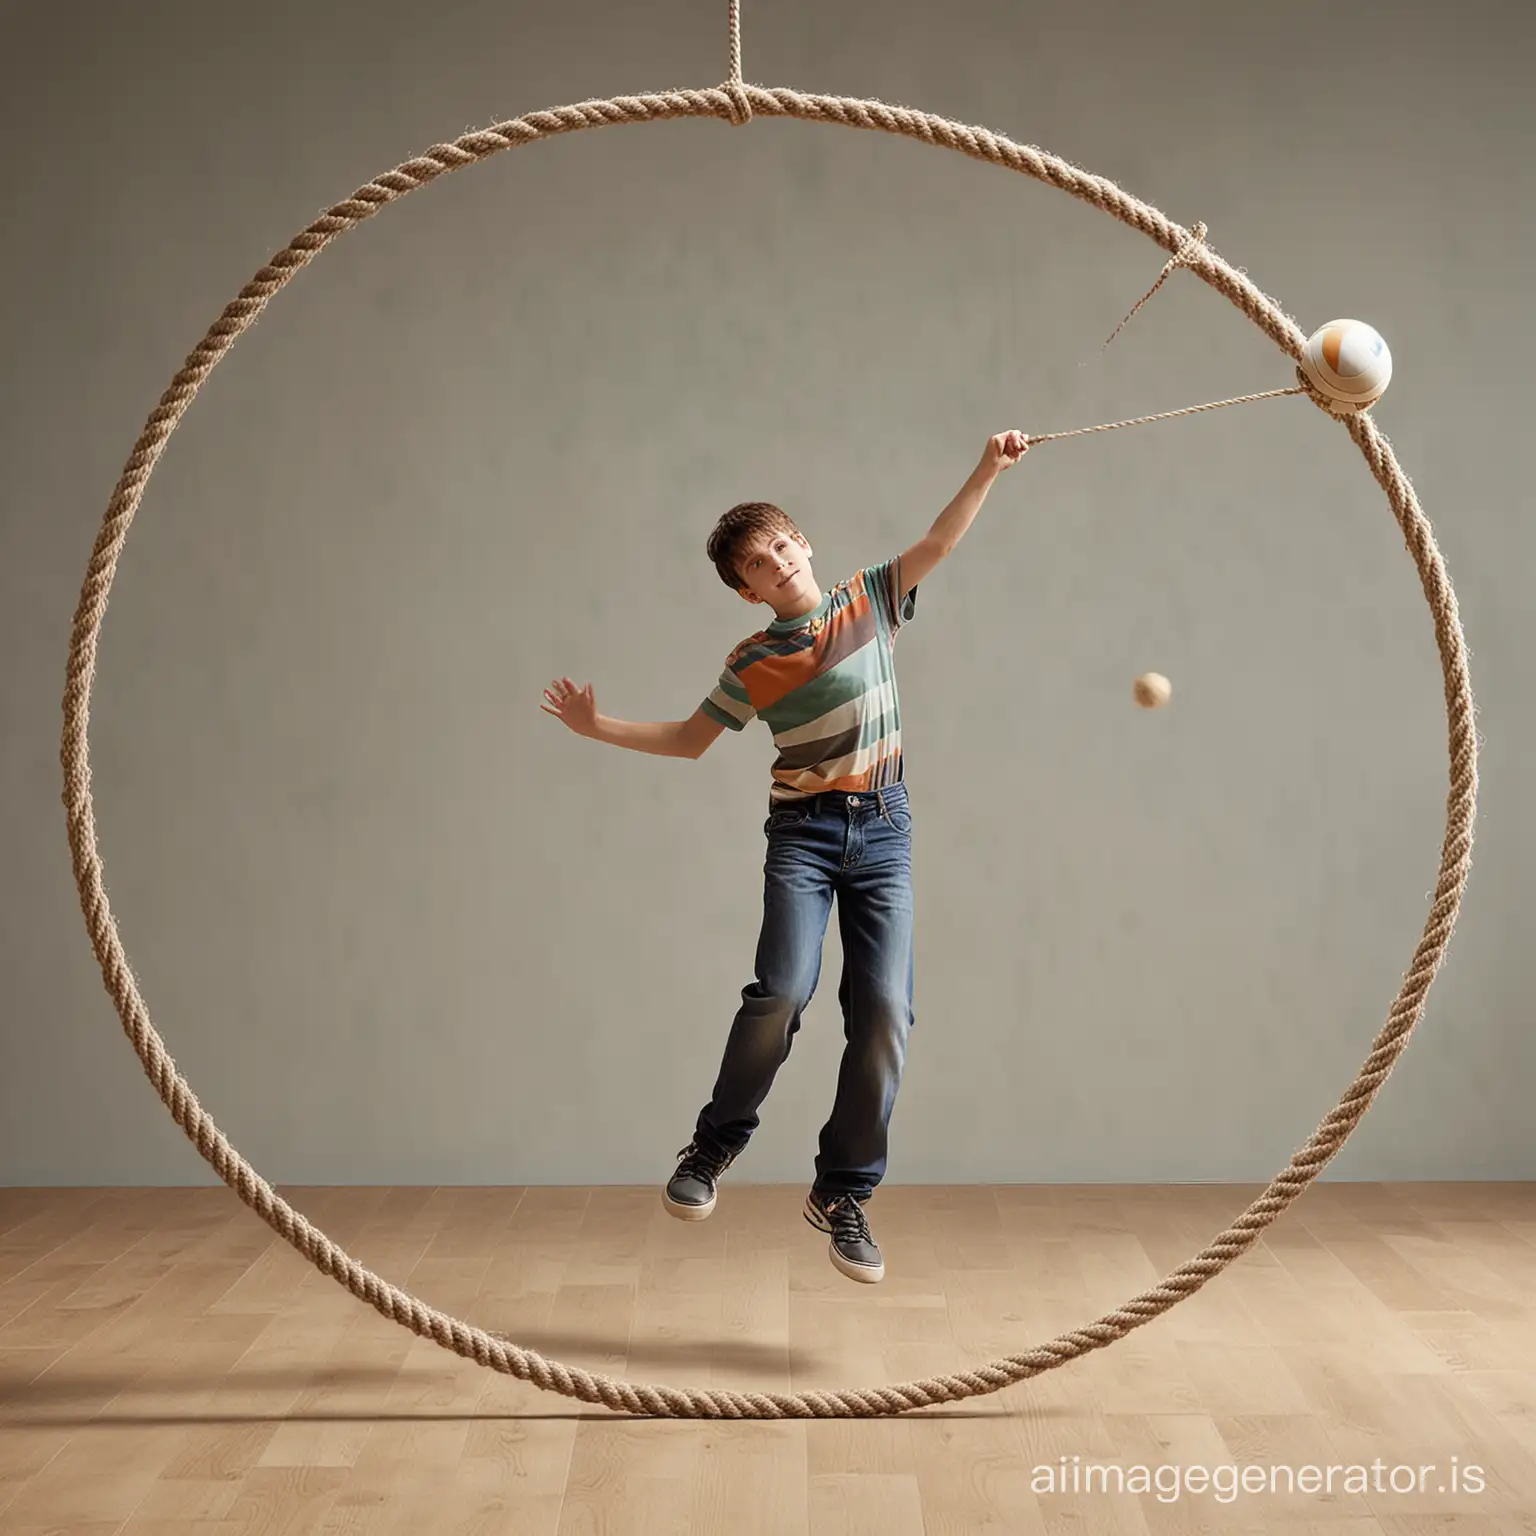 Boy-Swinging-Ball-in-Circular-Motion-Dynamic-Playtime-Fun